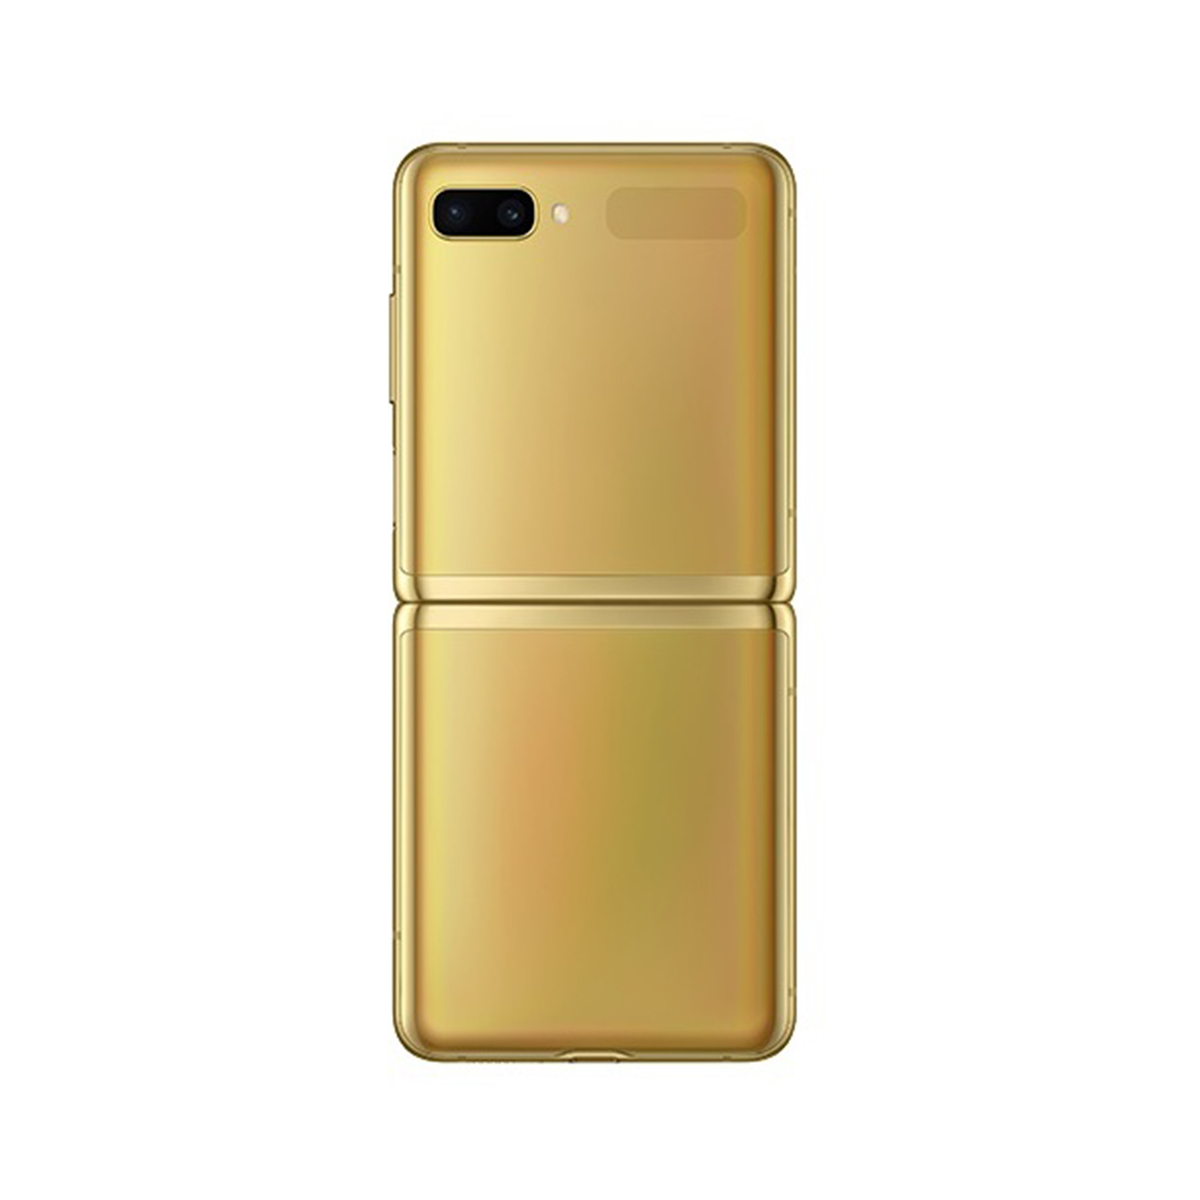 Buy Samsung Galaxy Z Flip F700 256gb Gold Online Lulu Hypermarket Oman